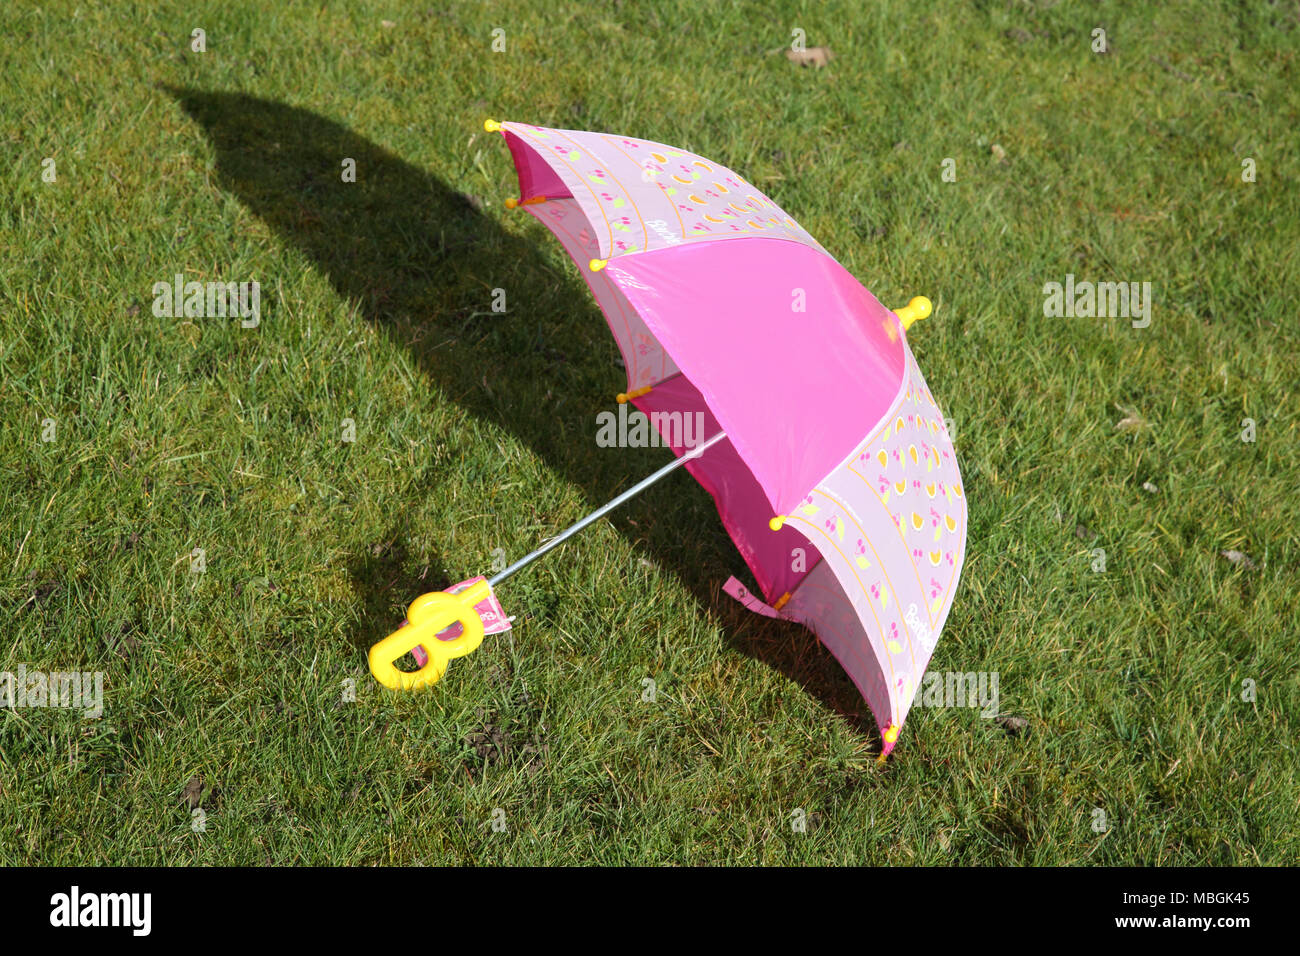 Pink Barbie Child's Umbrella Stock Photo - Alamy